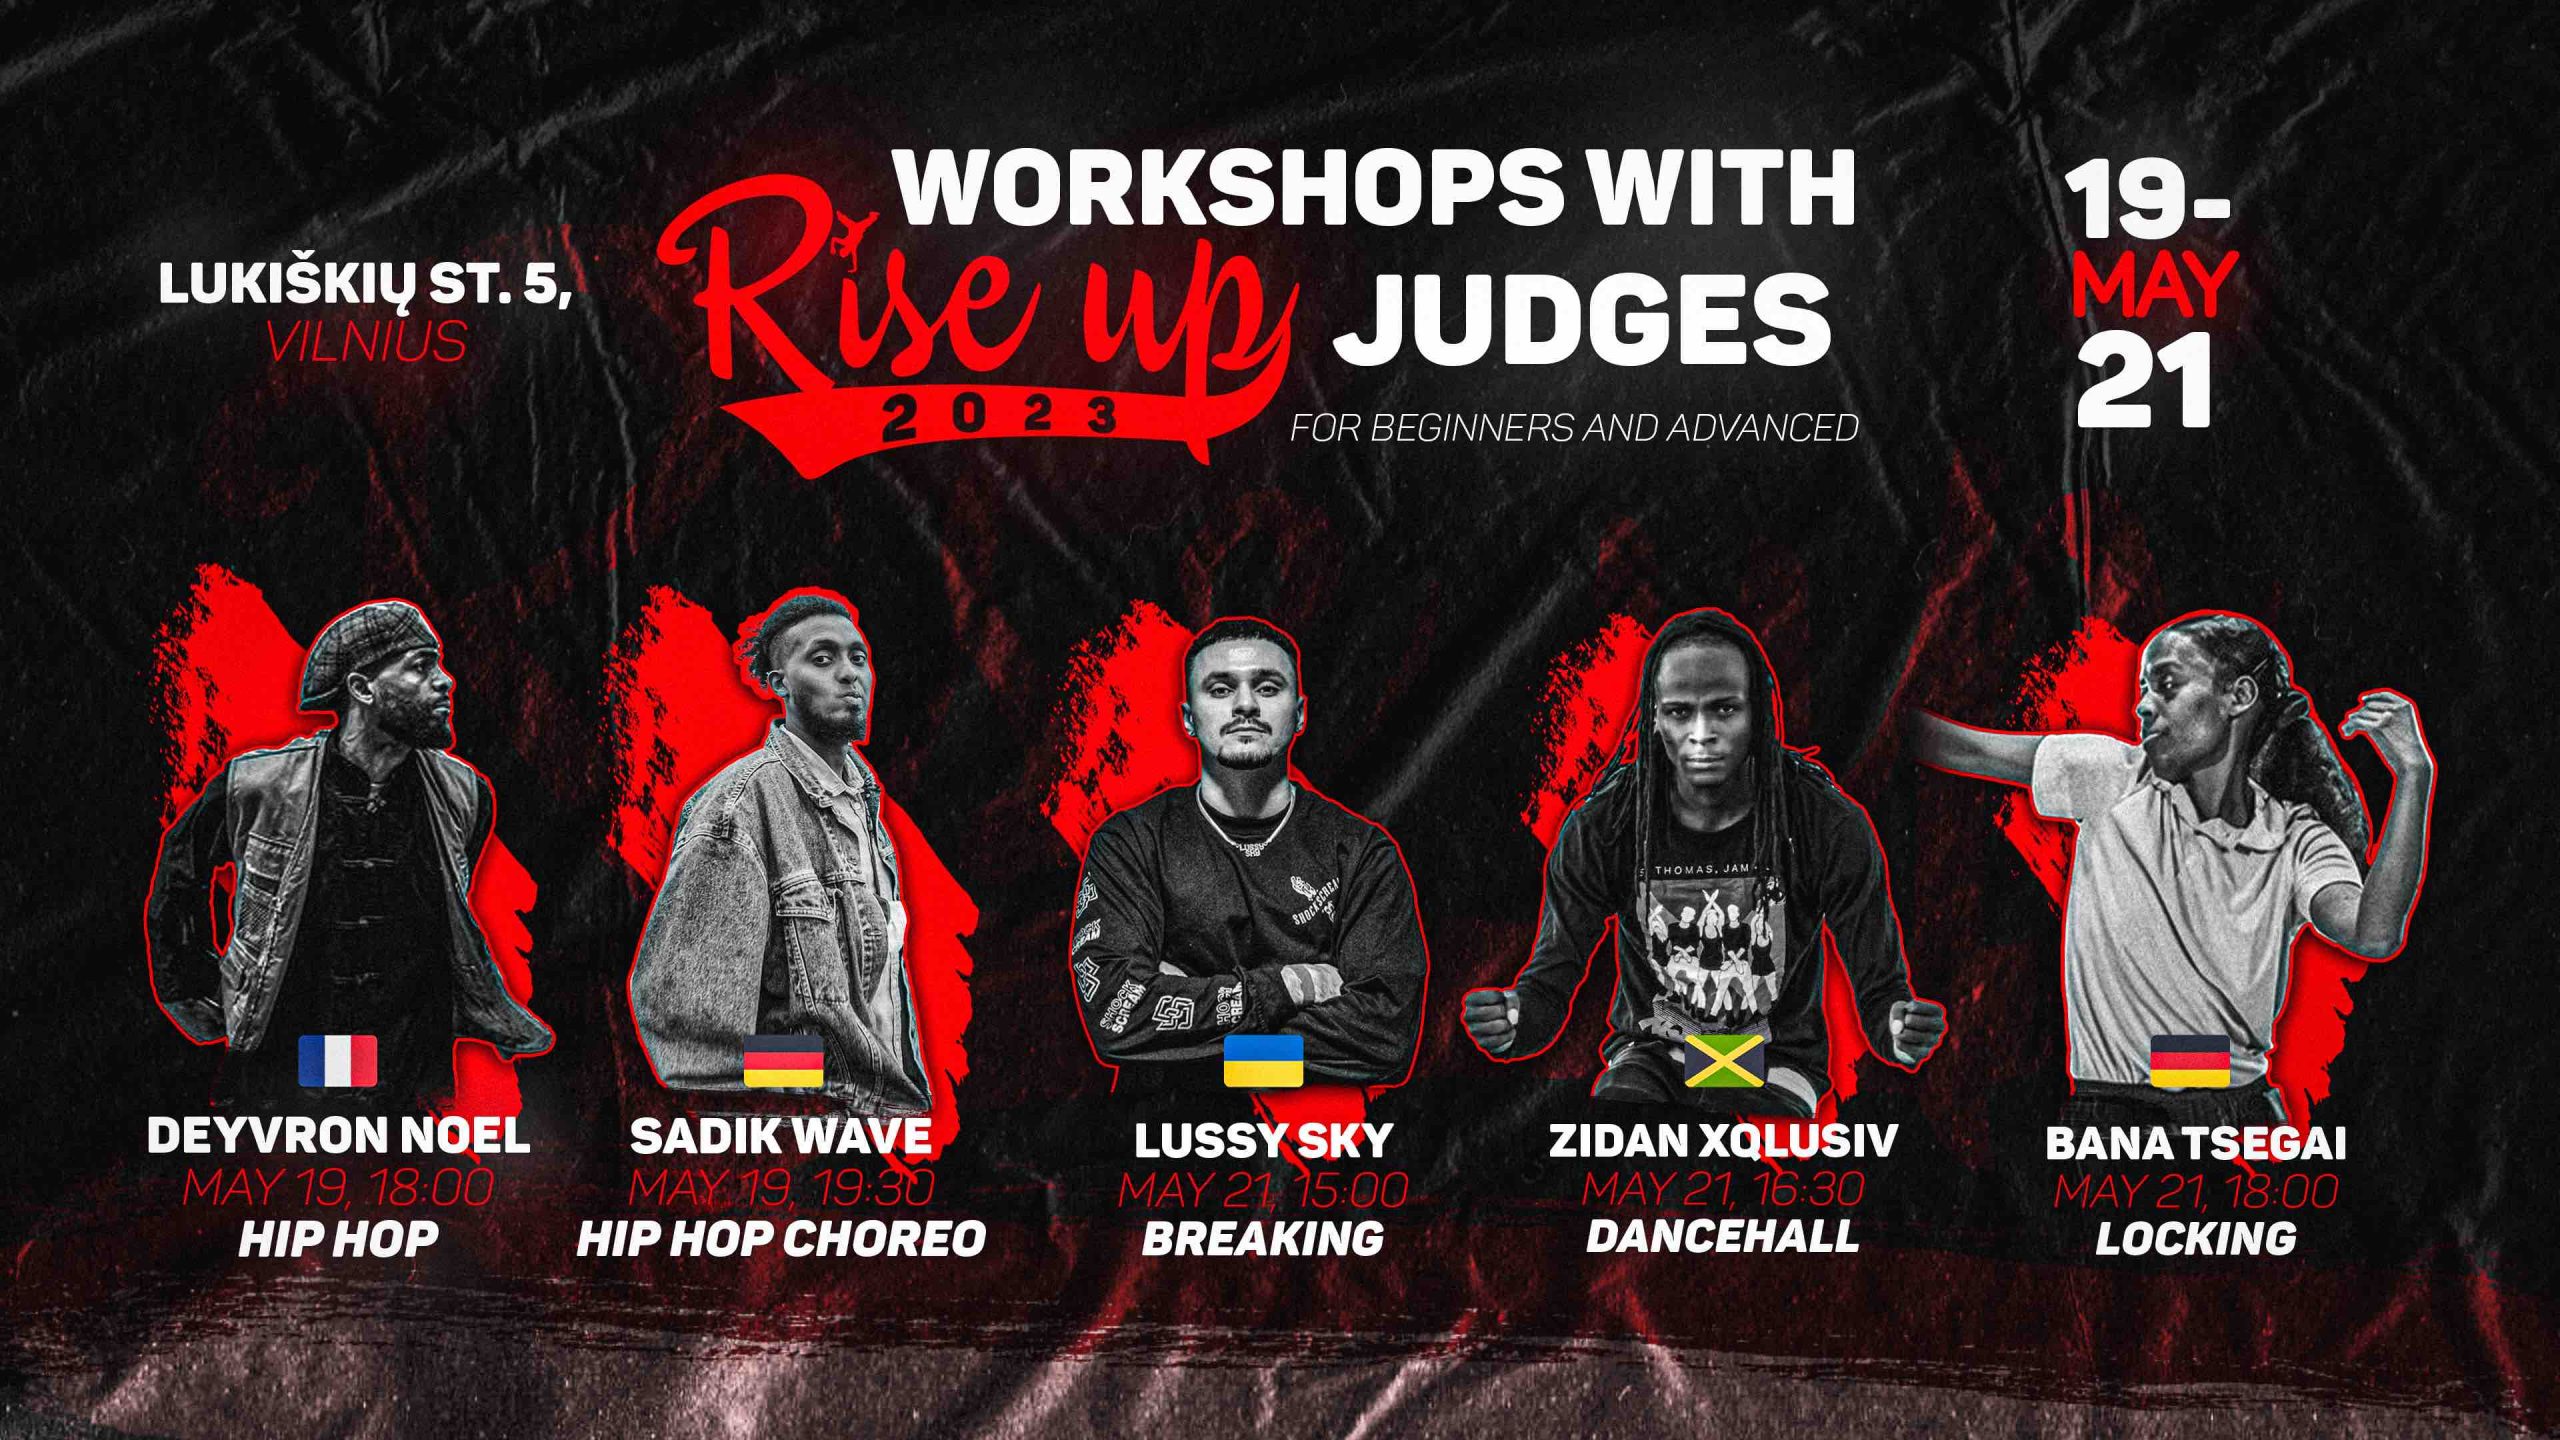 Street dance workshops with Rise Up 2023 judges